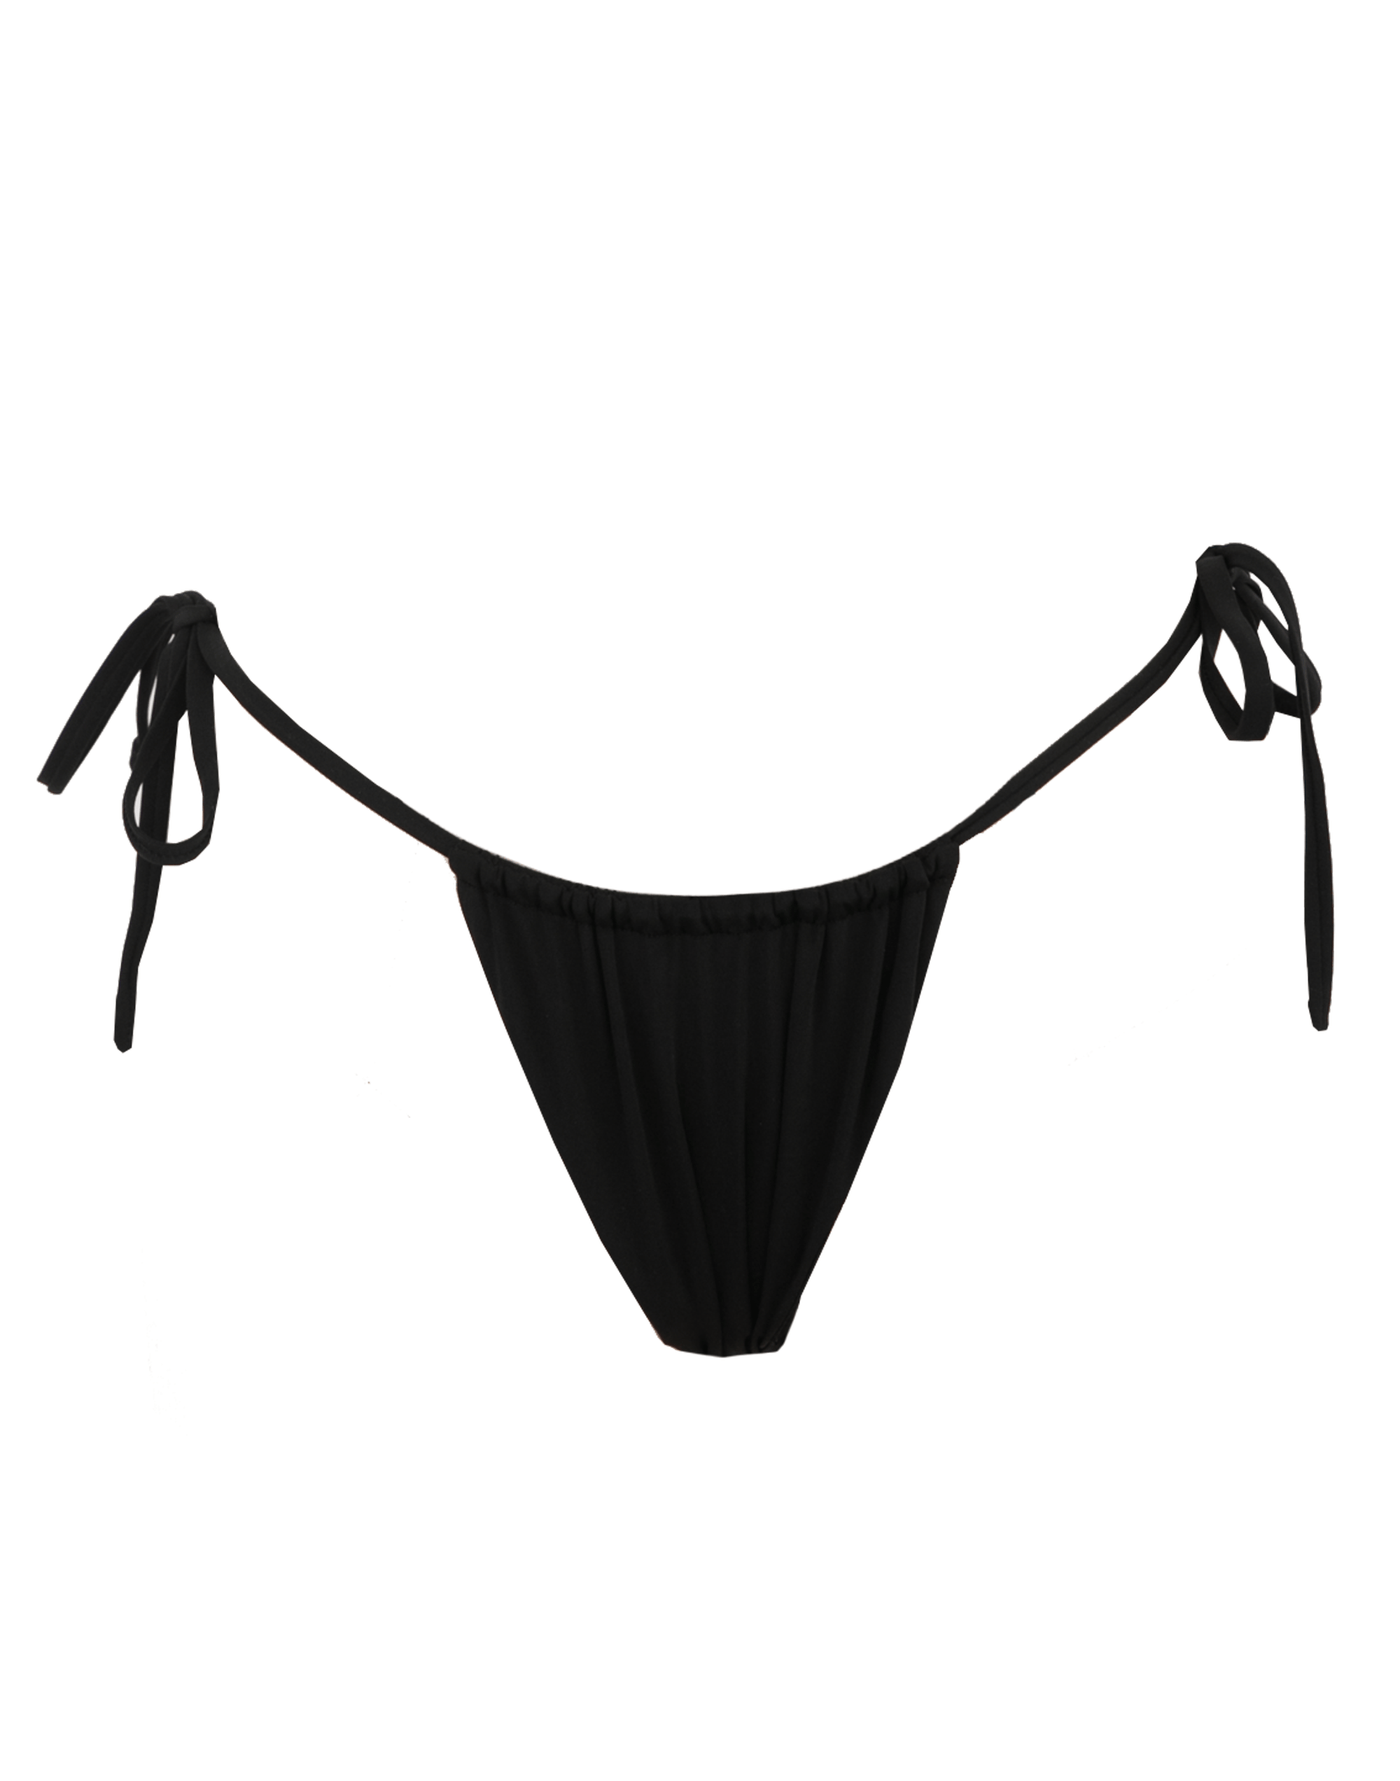 Quartz Side Tie Bottom (Jet Black) - Black Cheeky Side Tie Bikini Bottom - Women's Swim - Charcoal Clothing mix-and-match